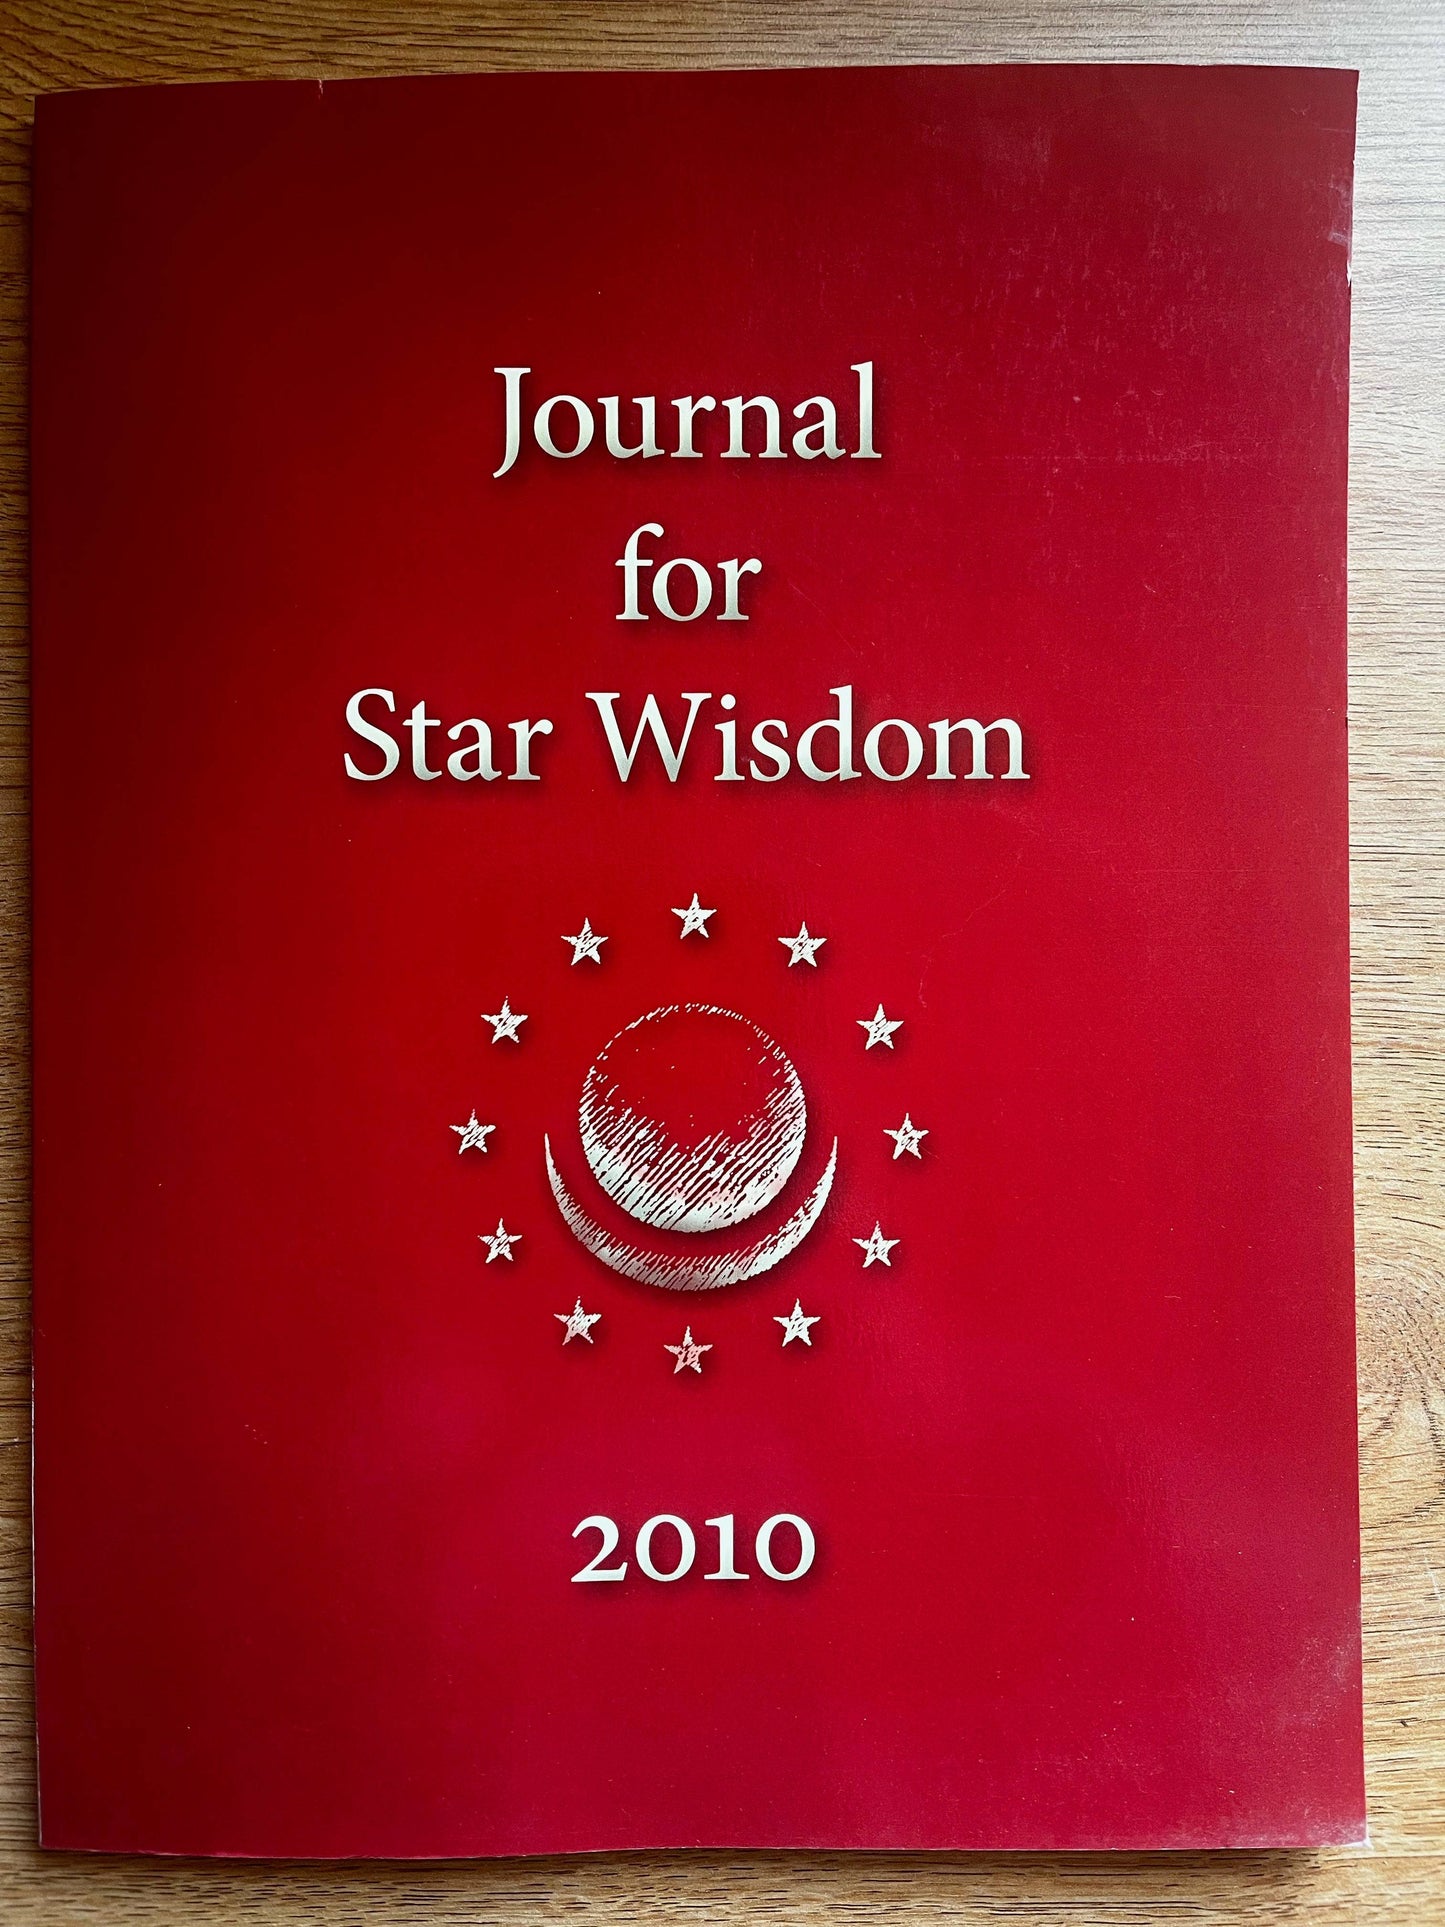 Journal for Star Wisdom 2010 by Robert Powell - The Josephine Porter Institute